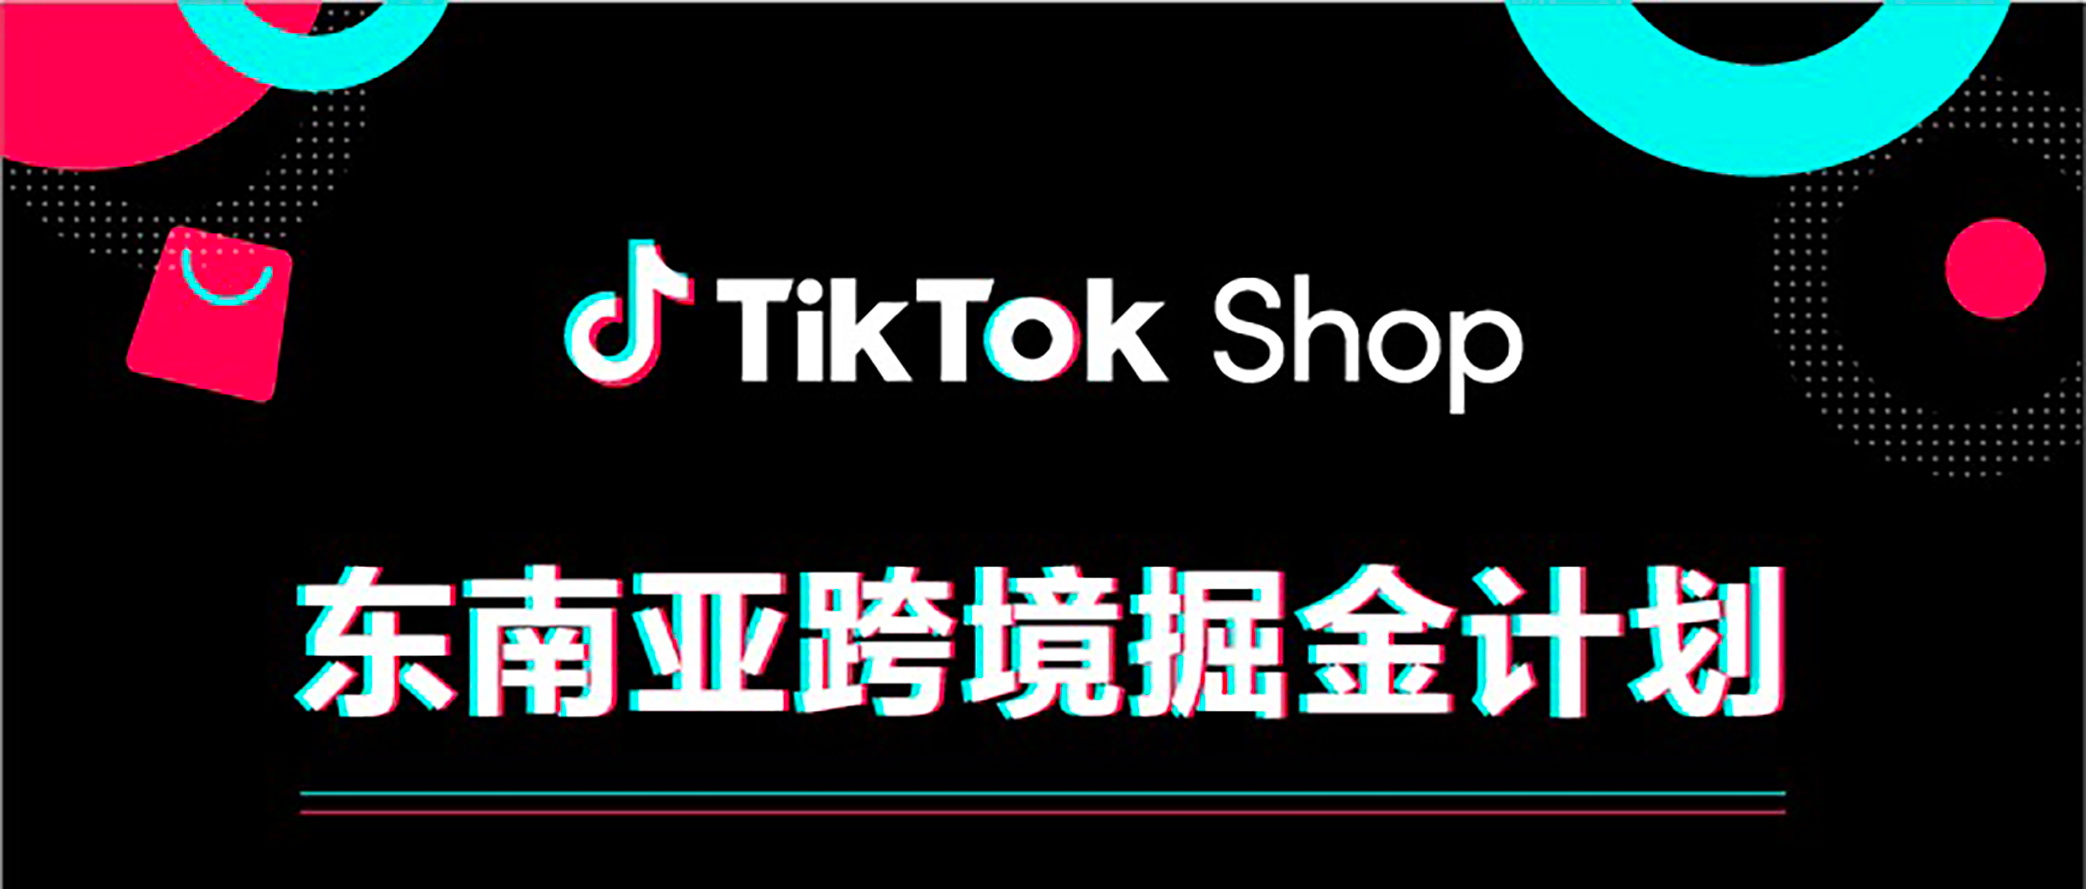 TikTok Shop东南亚跨境掘金计划缩略图